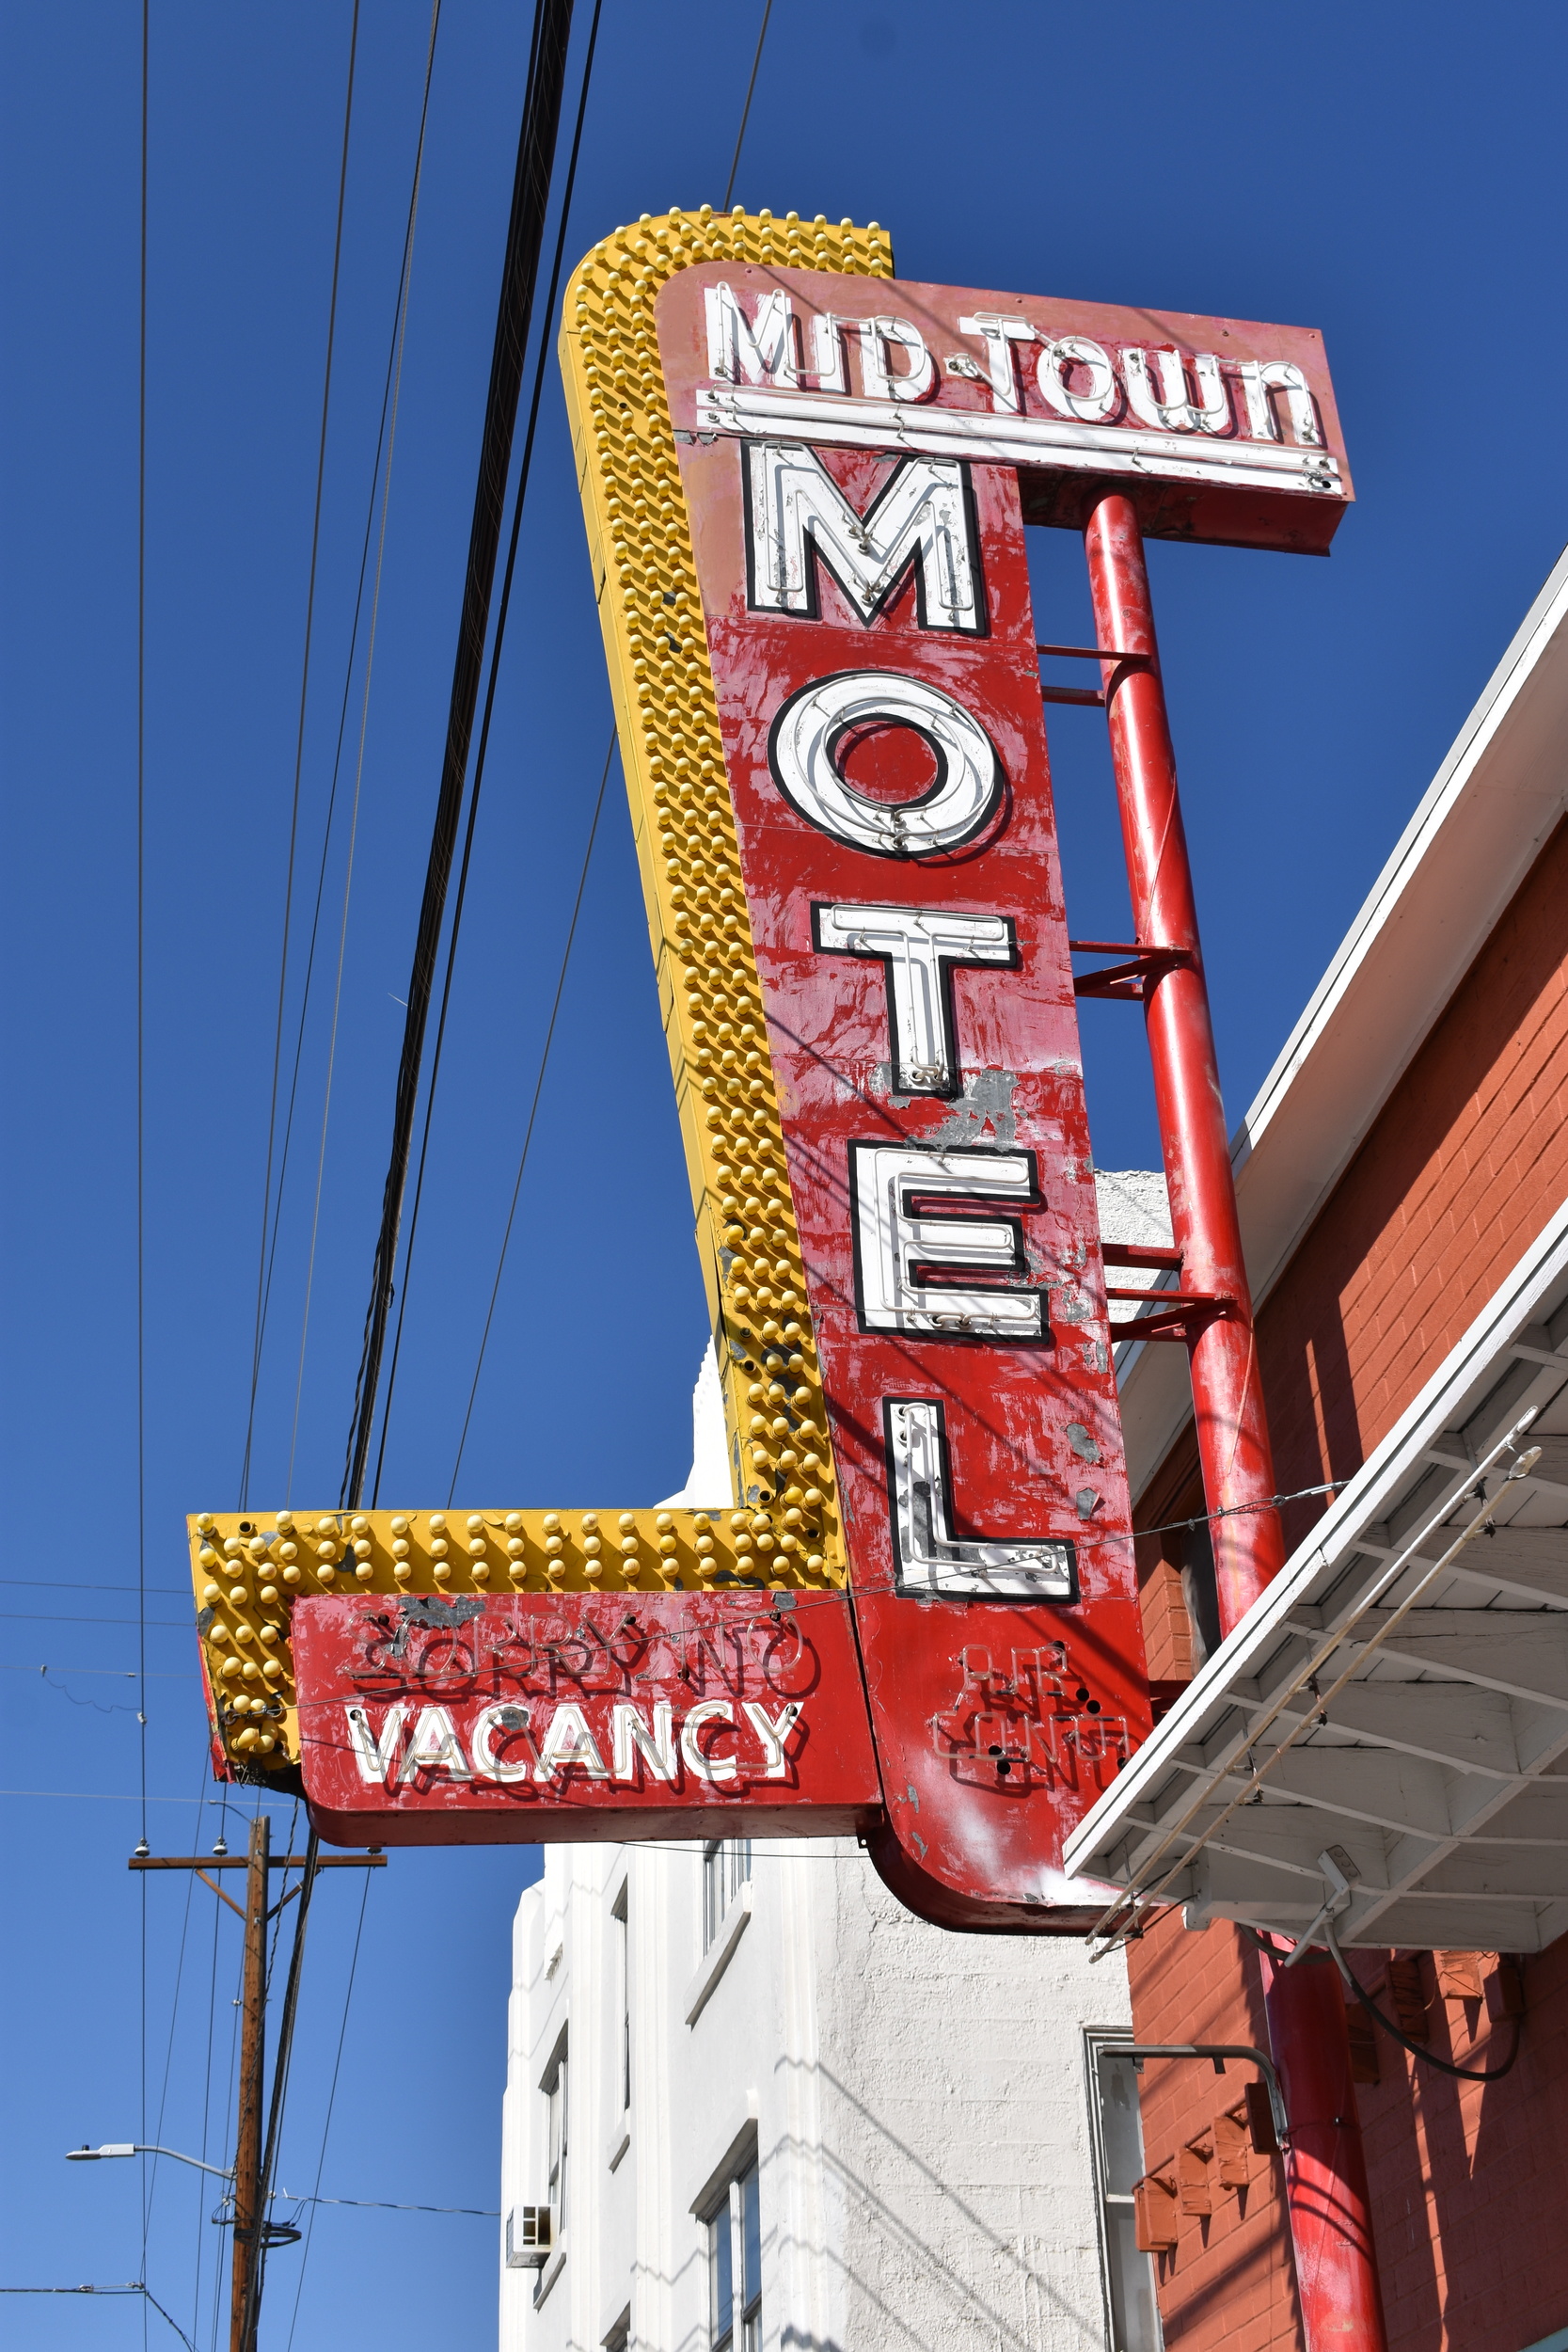 Midtown Motel flag mounted sign, Reno, Nevada